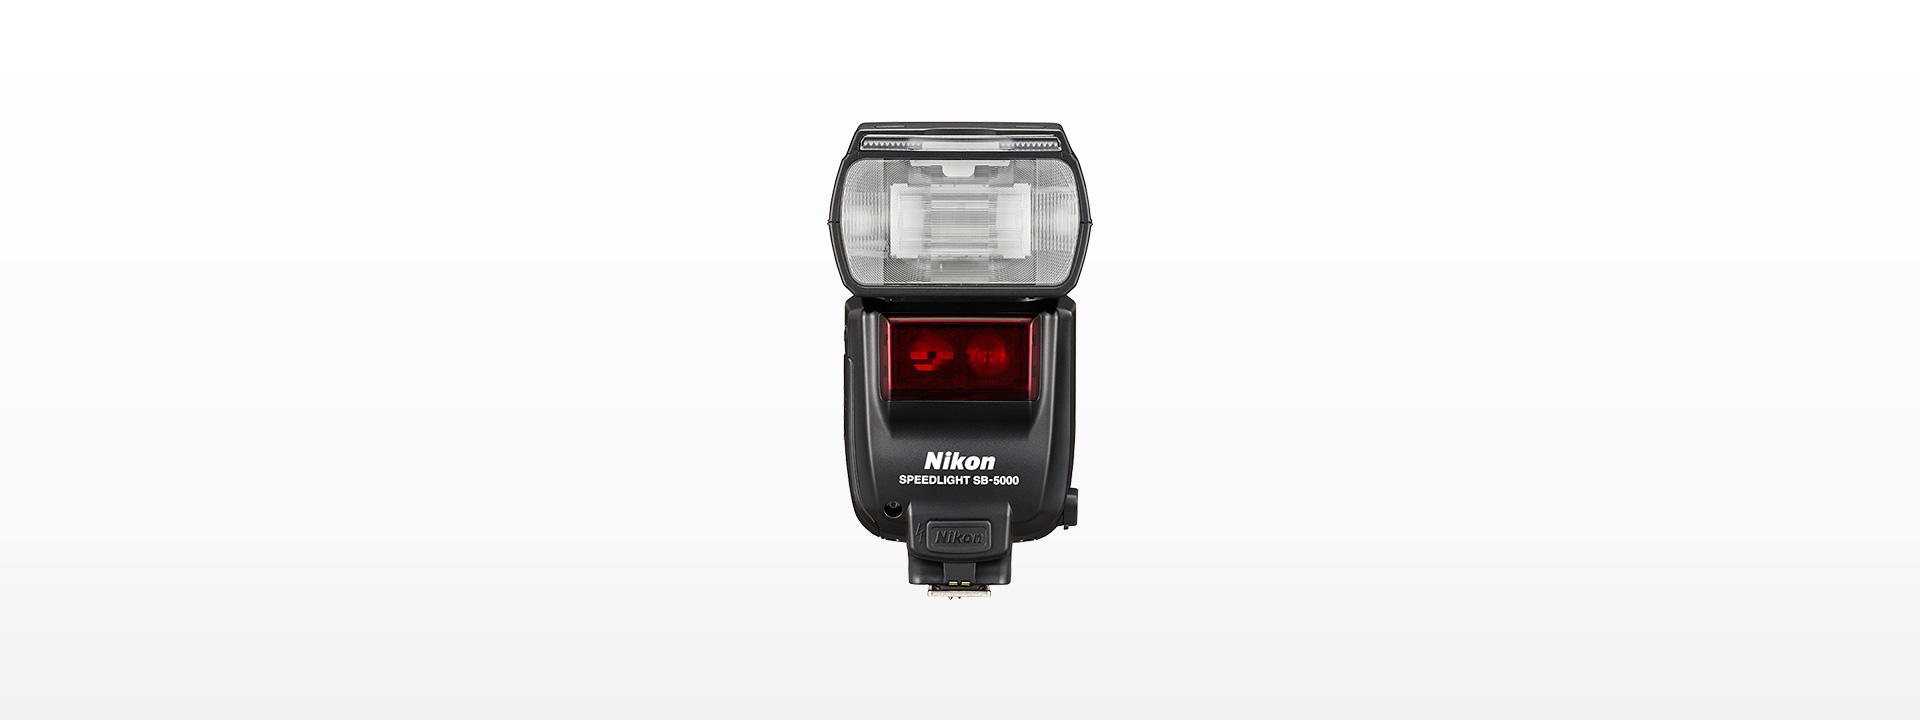 Nikon  SB5000 スピードライト